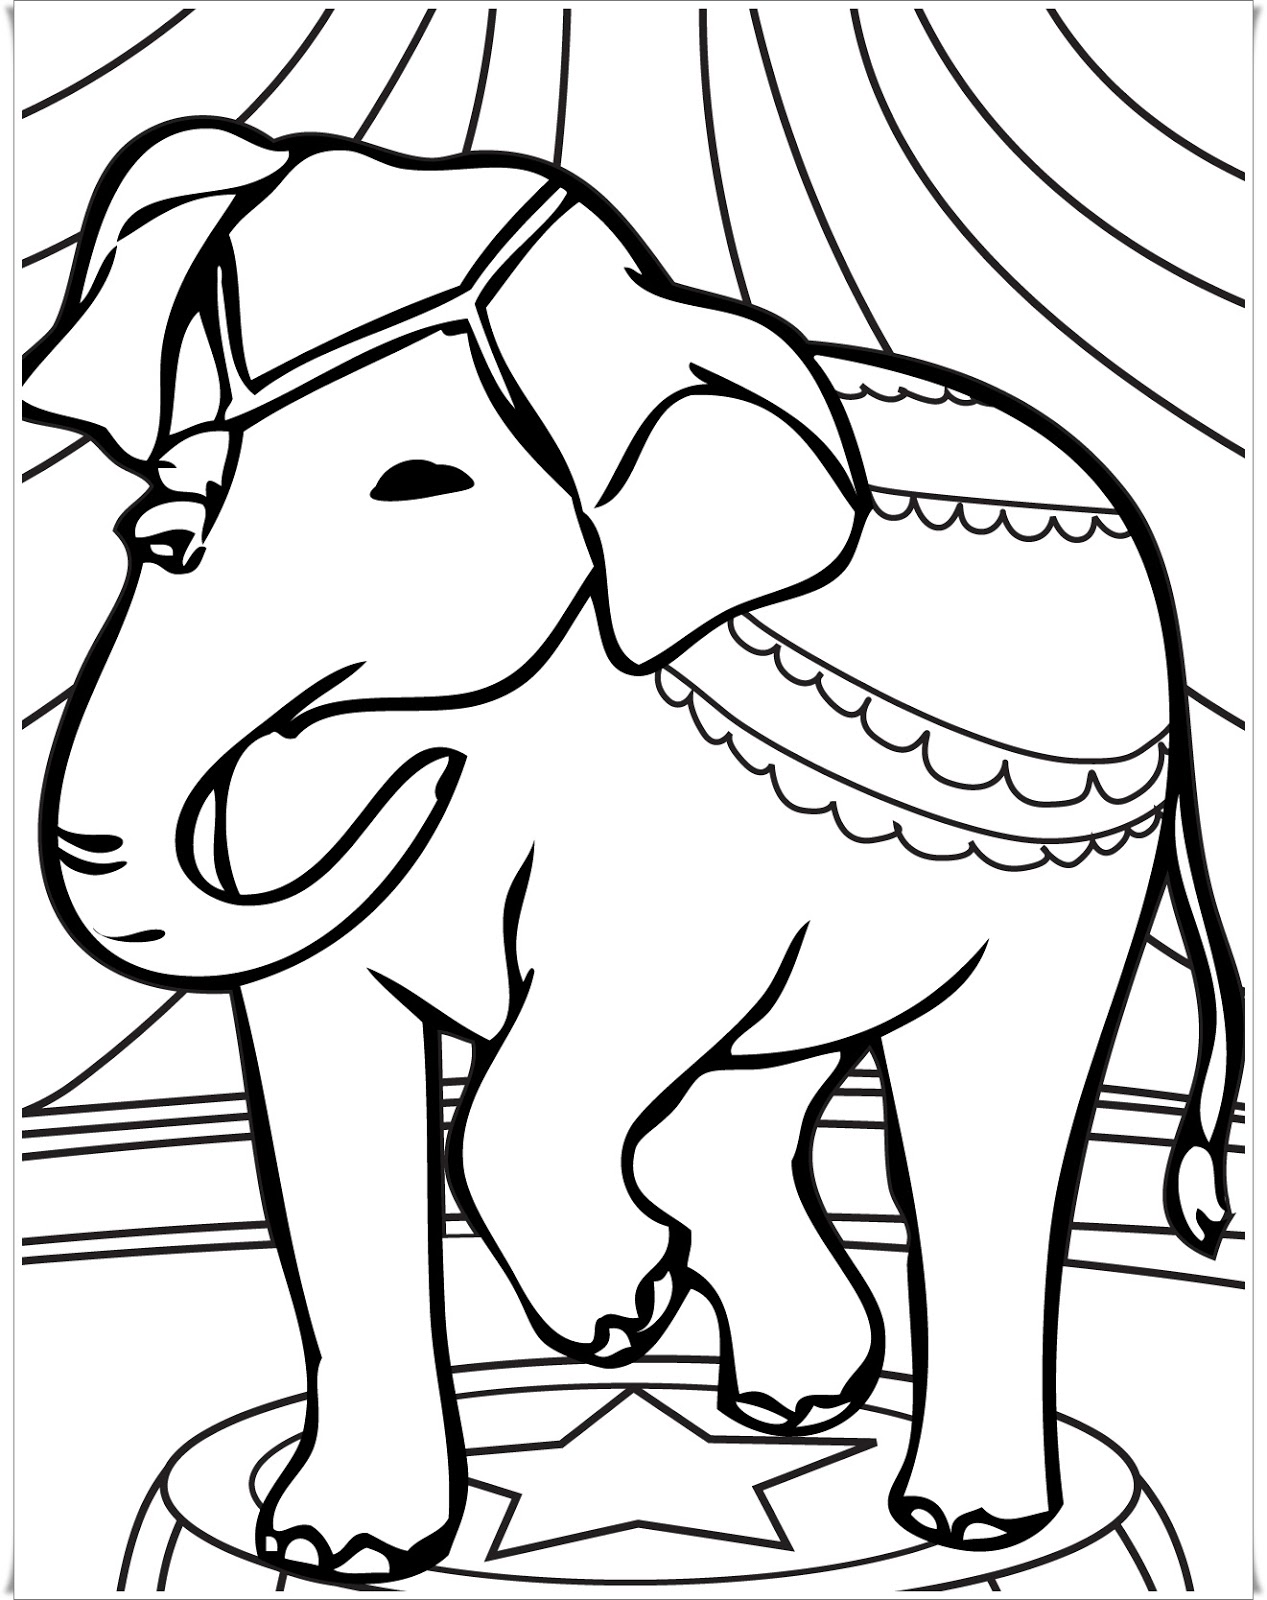 Elefant Ausmalbilder Zum Ausdrucken Elefant Ausmalbild Ausmalbilder